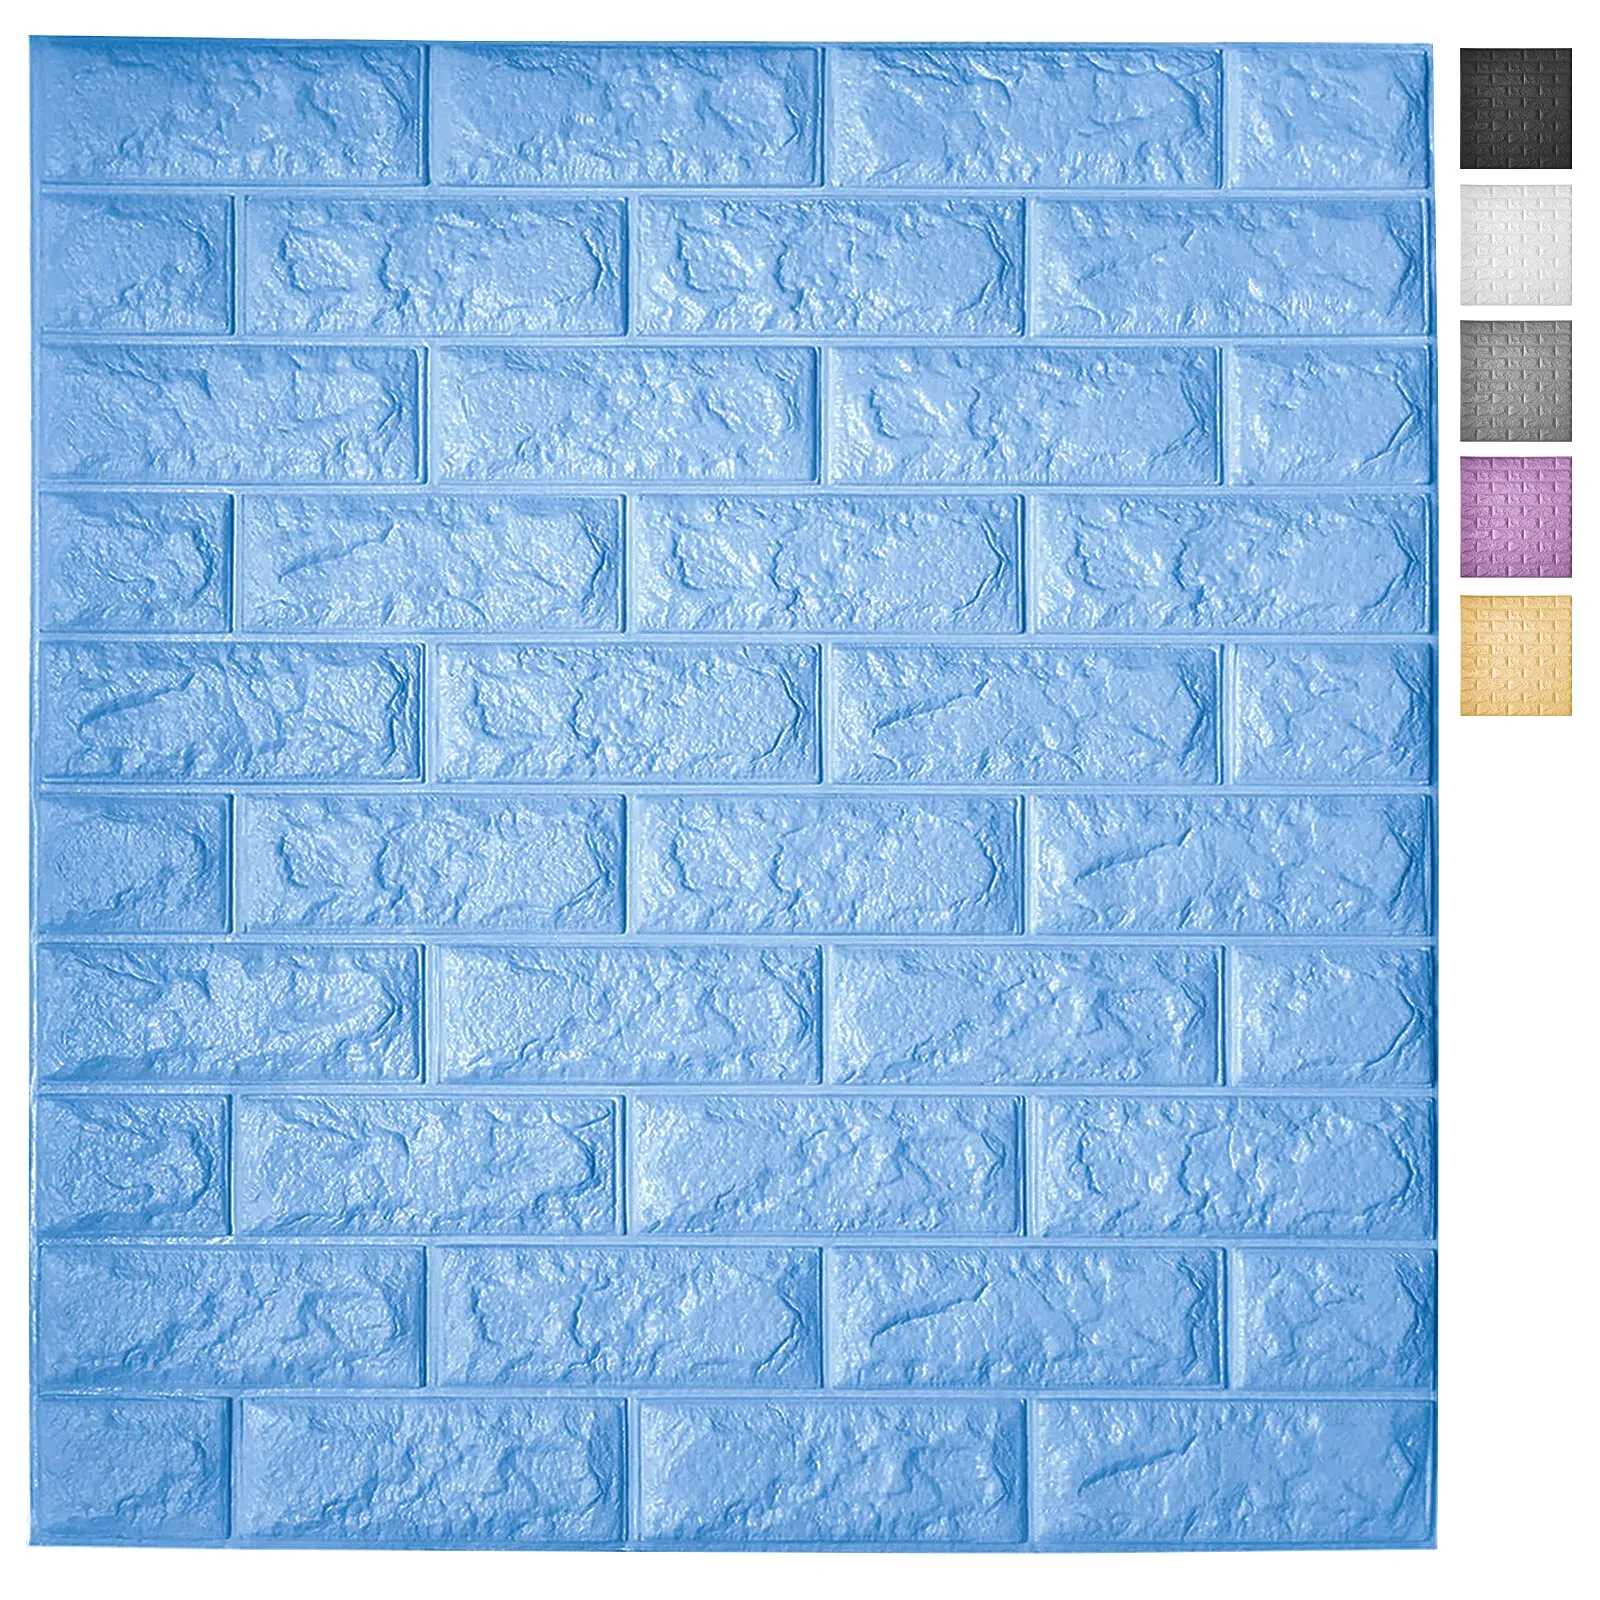 Art3d 5-Pack Peel en Stick 3D Wallpaper Panelen voor Interieur Wall Decor Zelfklevende Schuim Bakstenen Wallpapers In Blue, Covers 29 Sq.ft